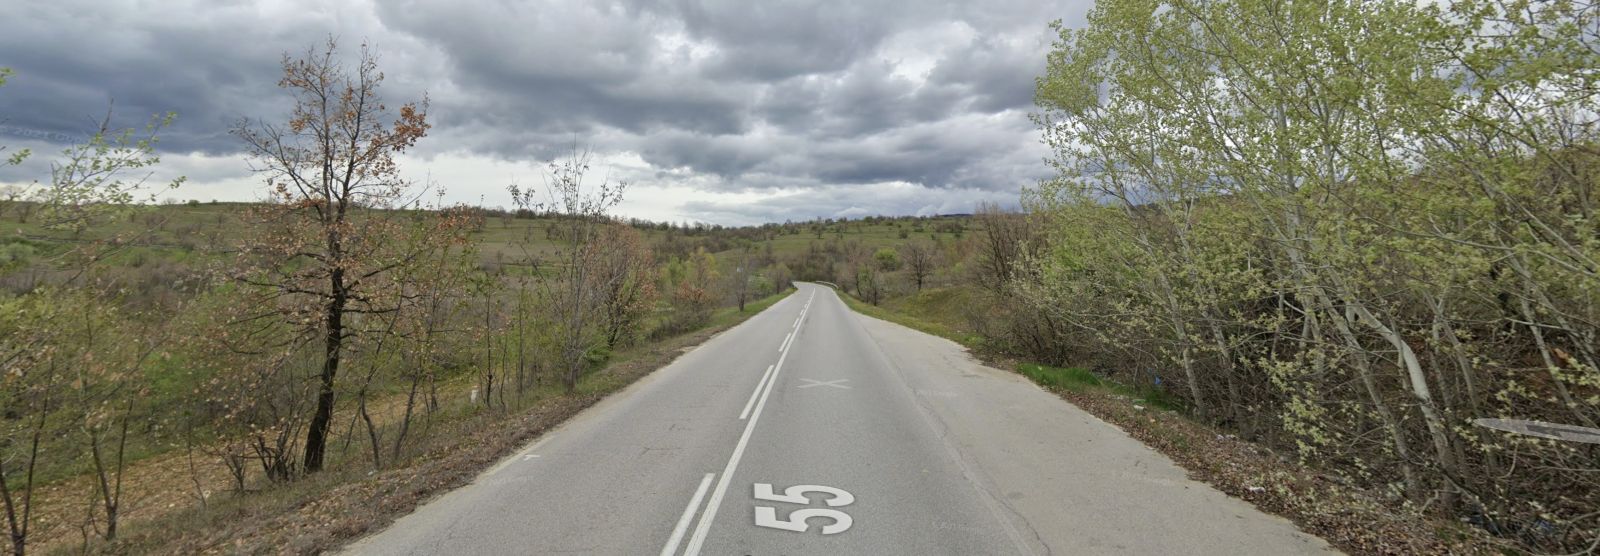 Катастрофа автобус, село Младиново, Свиленград, ЕЦТП, липсващ пътен знак